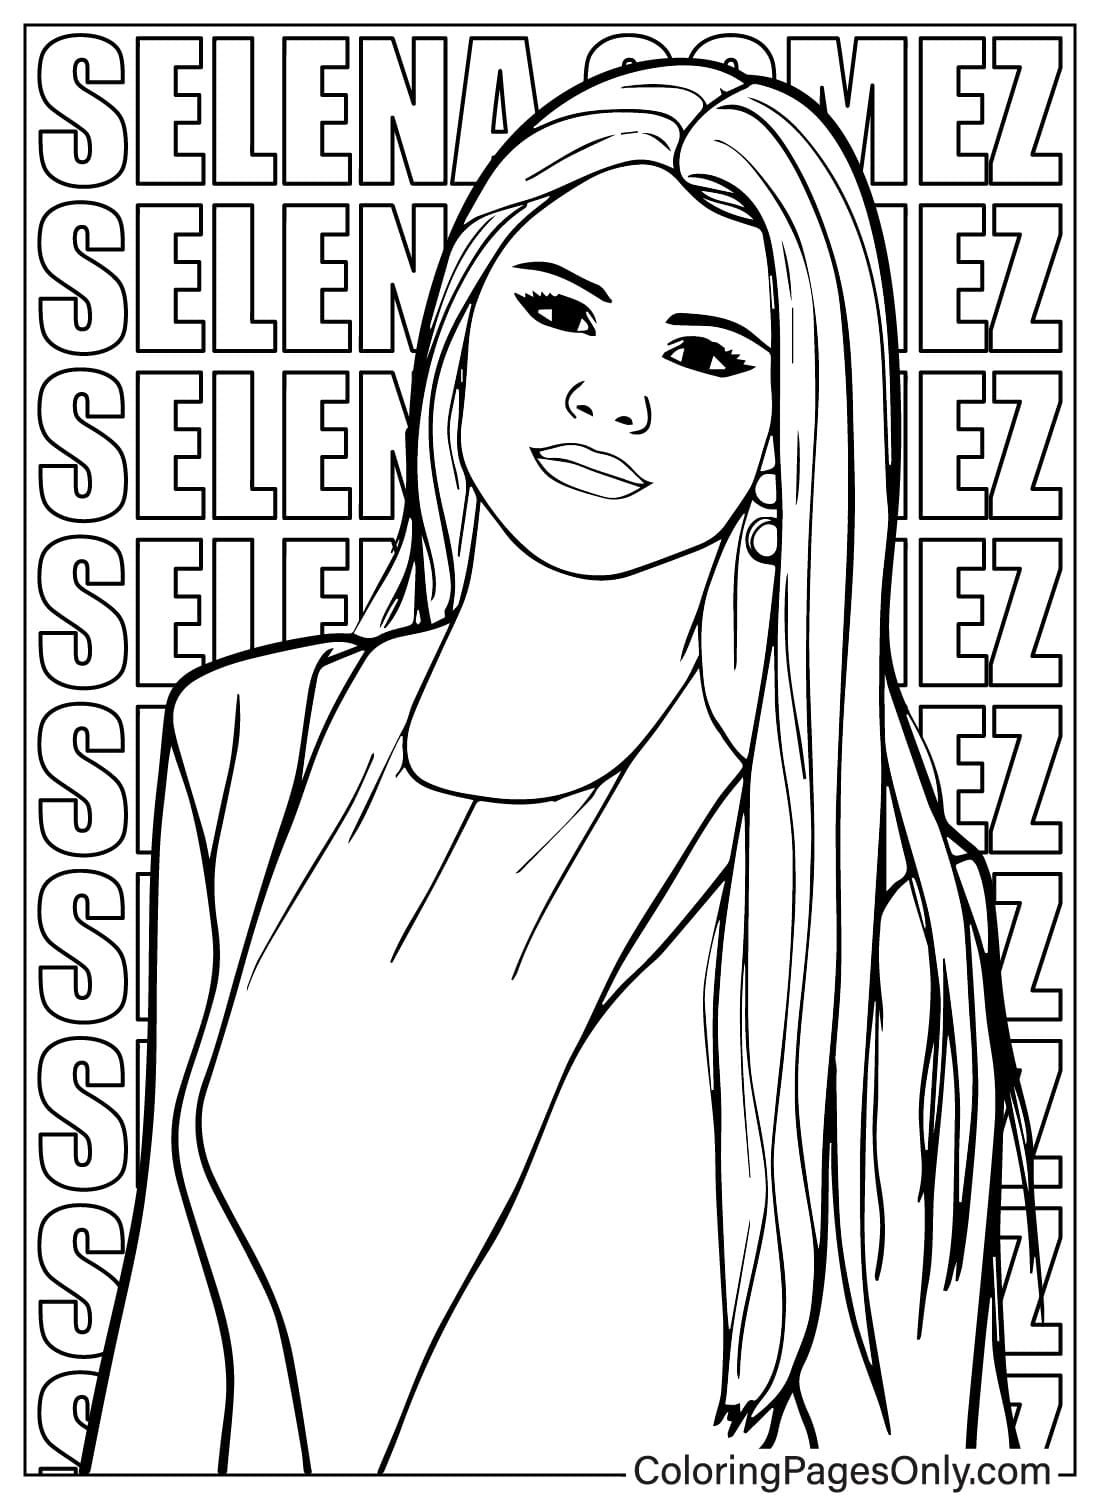 Selena Gomez Coloring Page to Print from Selena Gomez